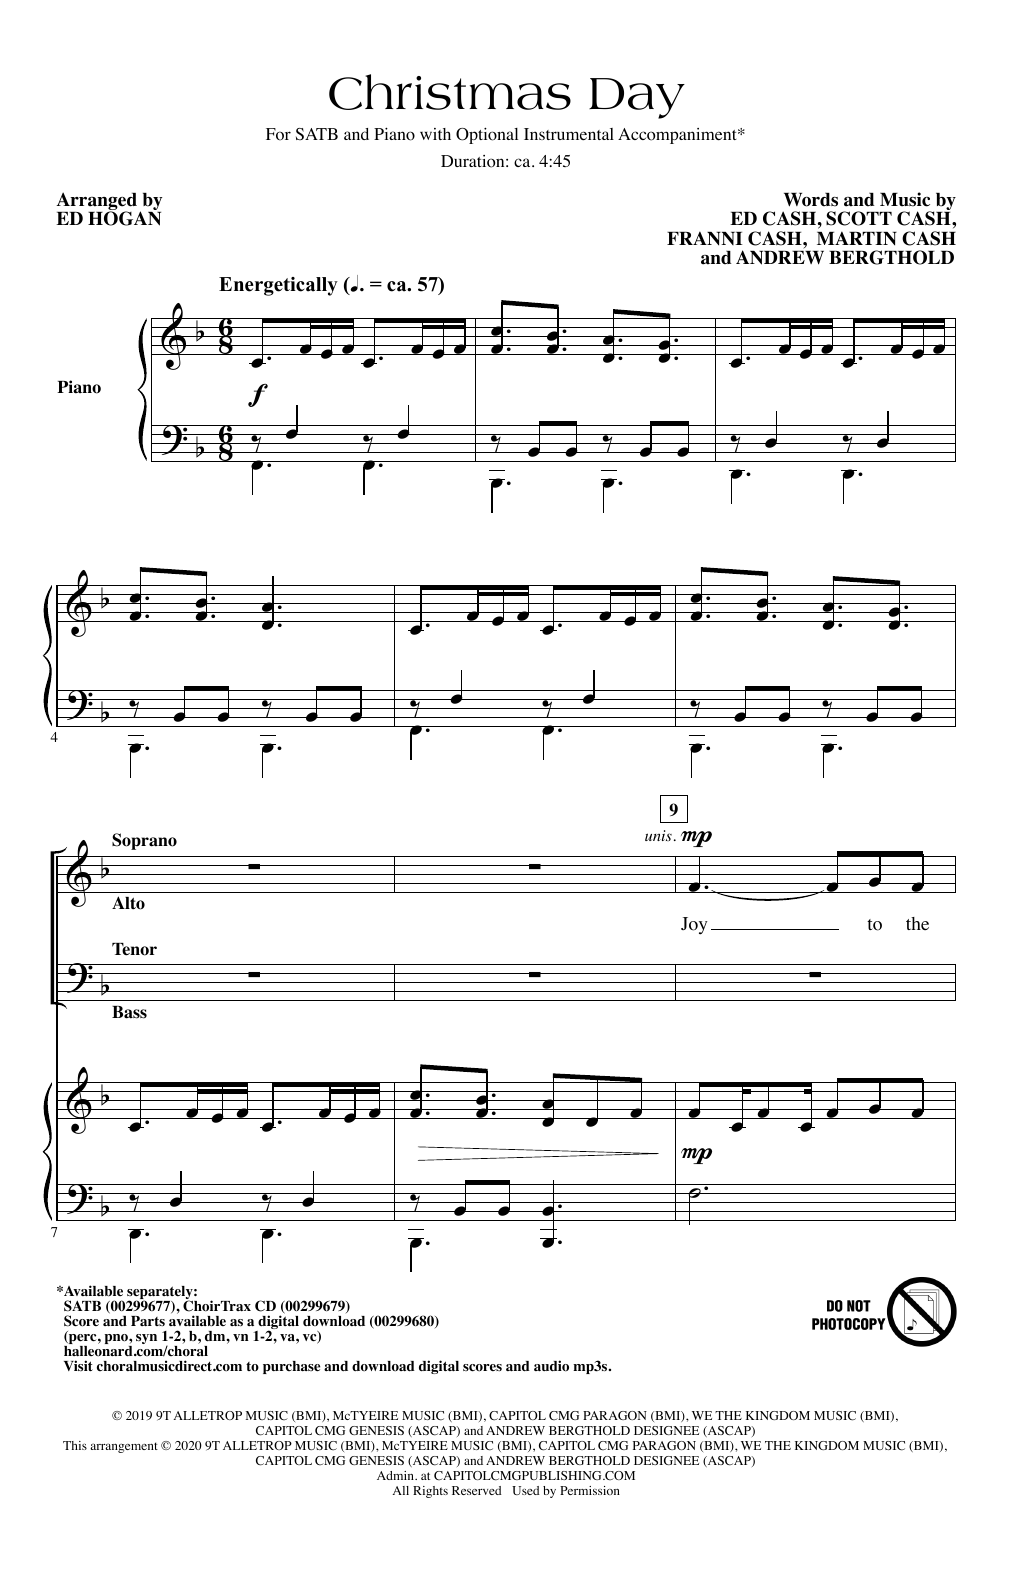 Chris Tomlin Christmas Day (arr. Ed Hogan) Sheet Music Notes & Chords for SATB Choir - Download or Print PDF